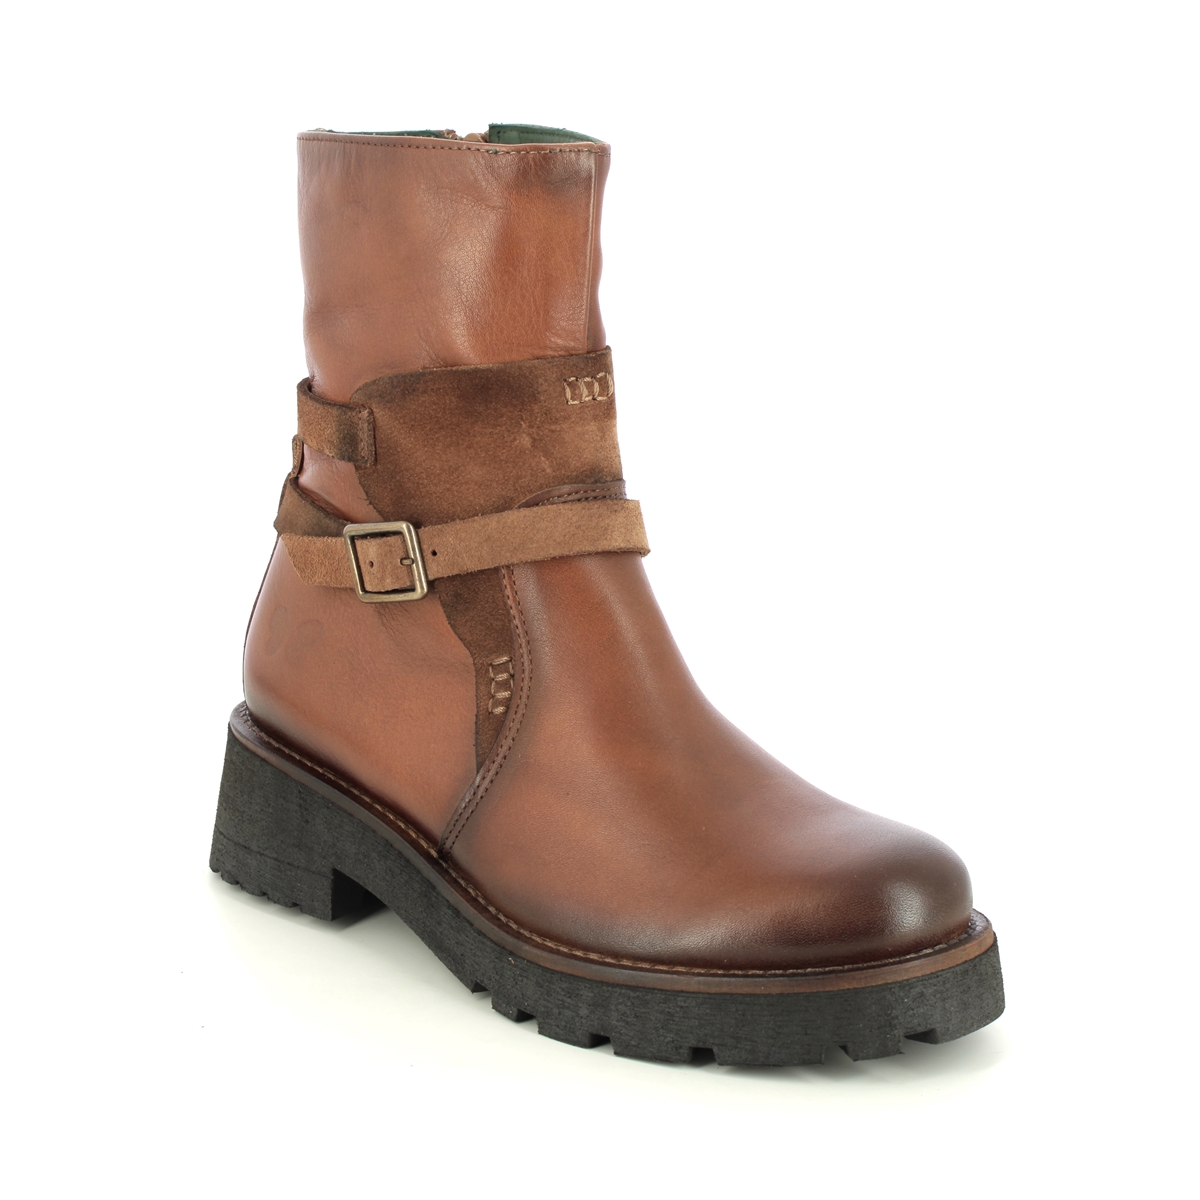 Felmini - Nadir  Strap (Tan Leather ) D550-11 In Size 37 In Plain Tan Leather